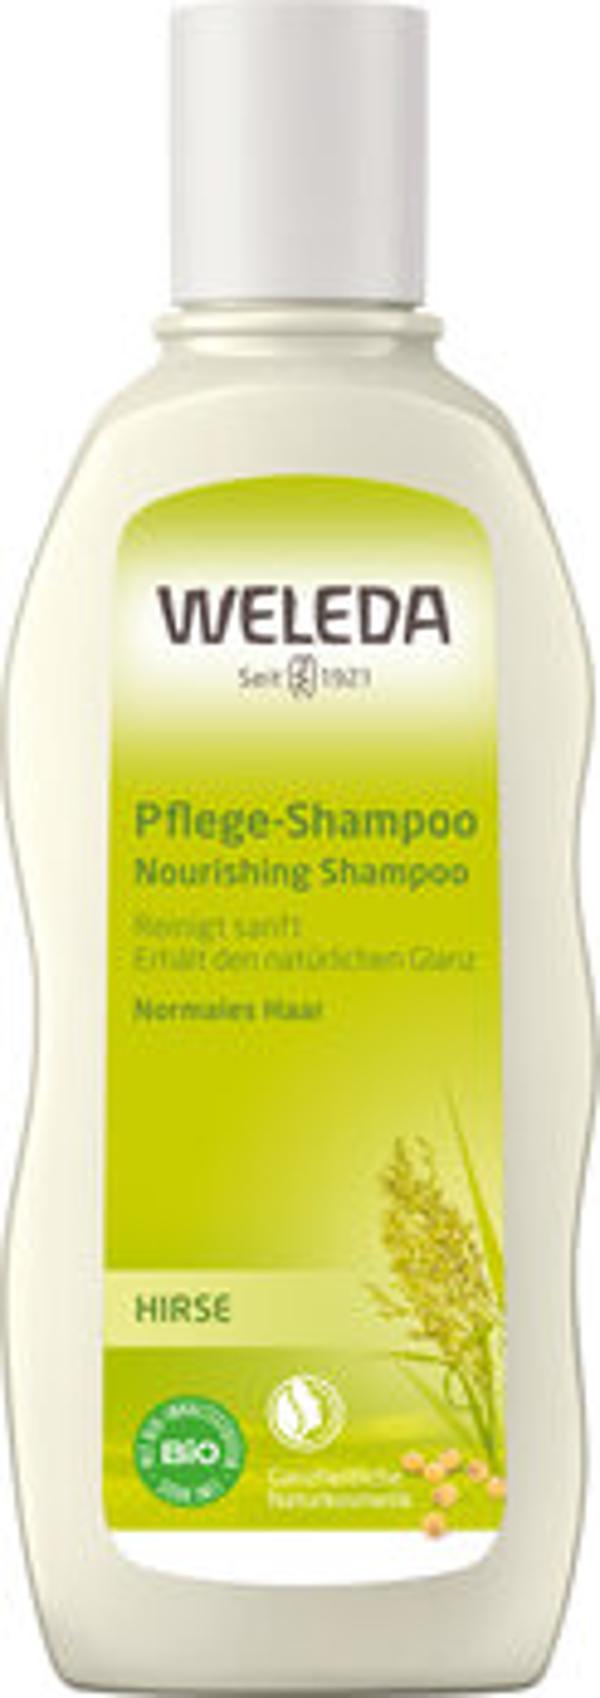 Produktfoto zu Hirse Pflege Shampoo